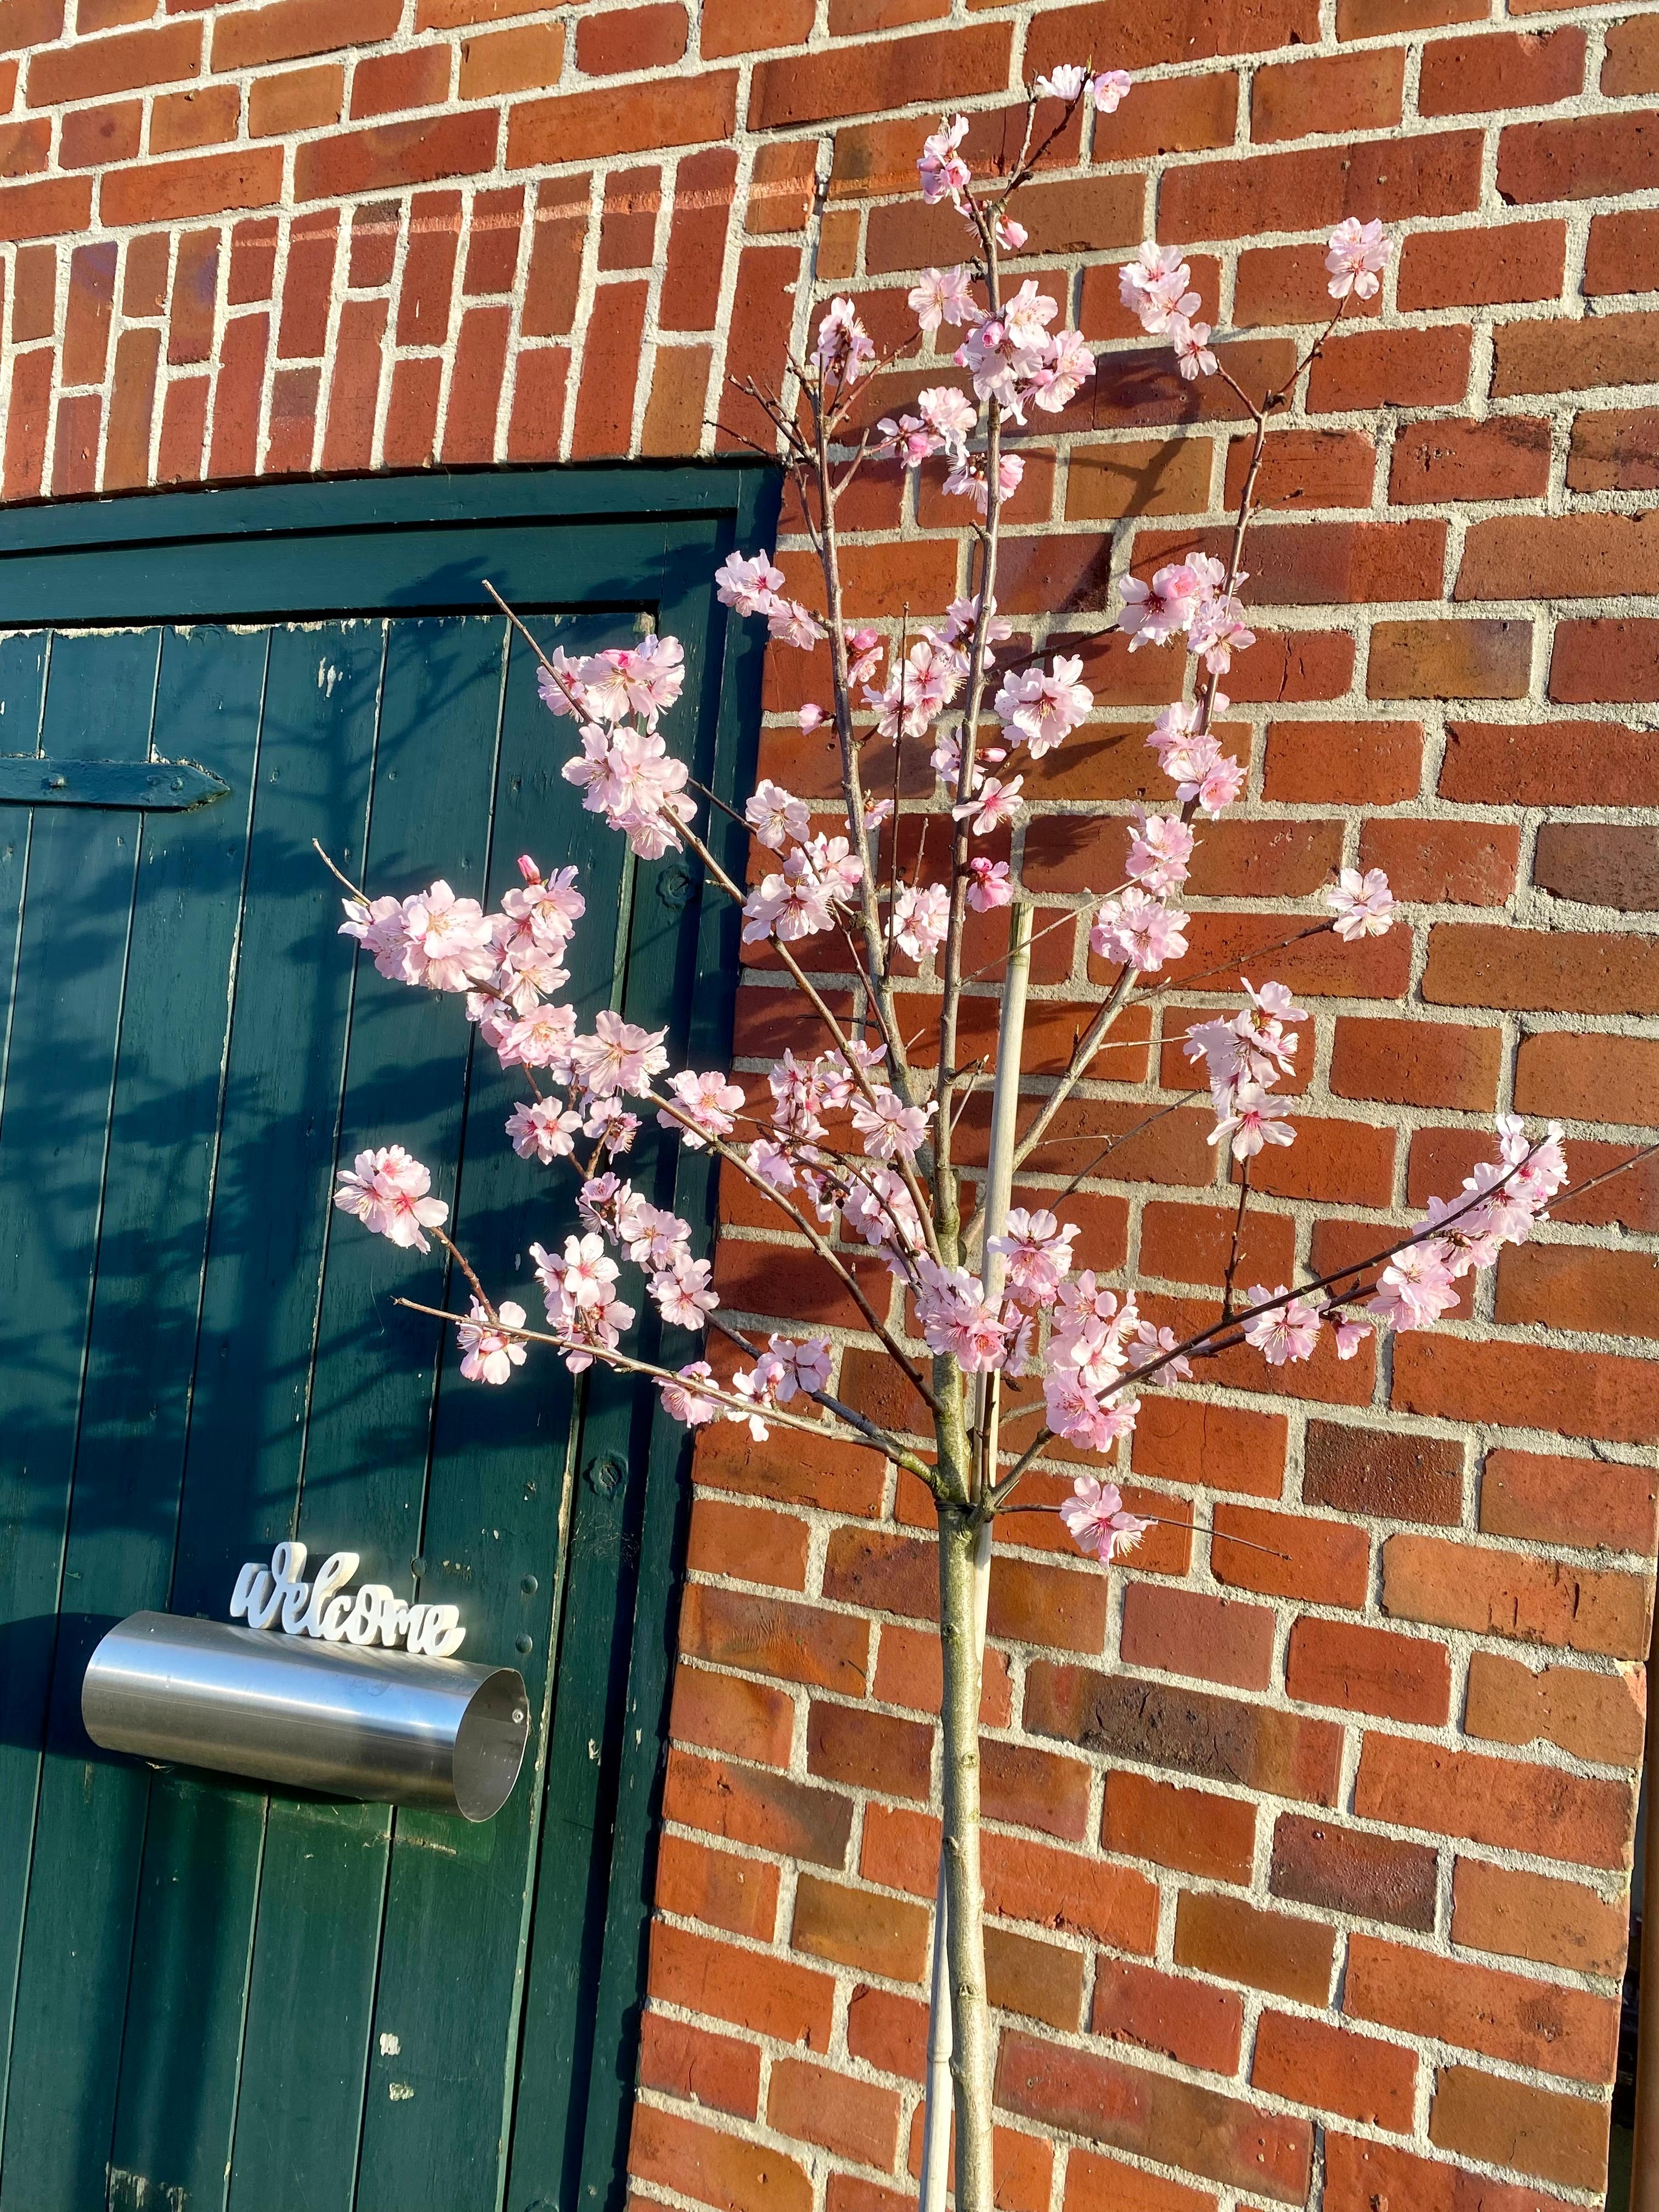 Unser Mandelbaum in voller Blüte 🌸 
#hallofrühling #mandelblüte #naturliebe #Selbstversorger 